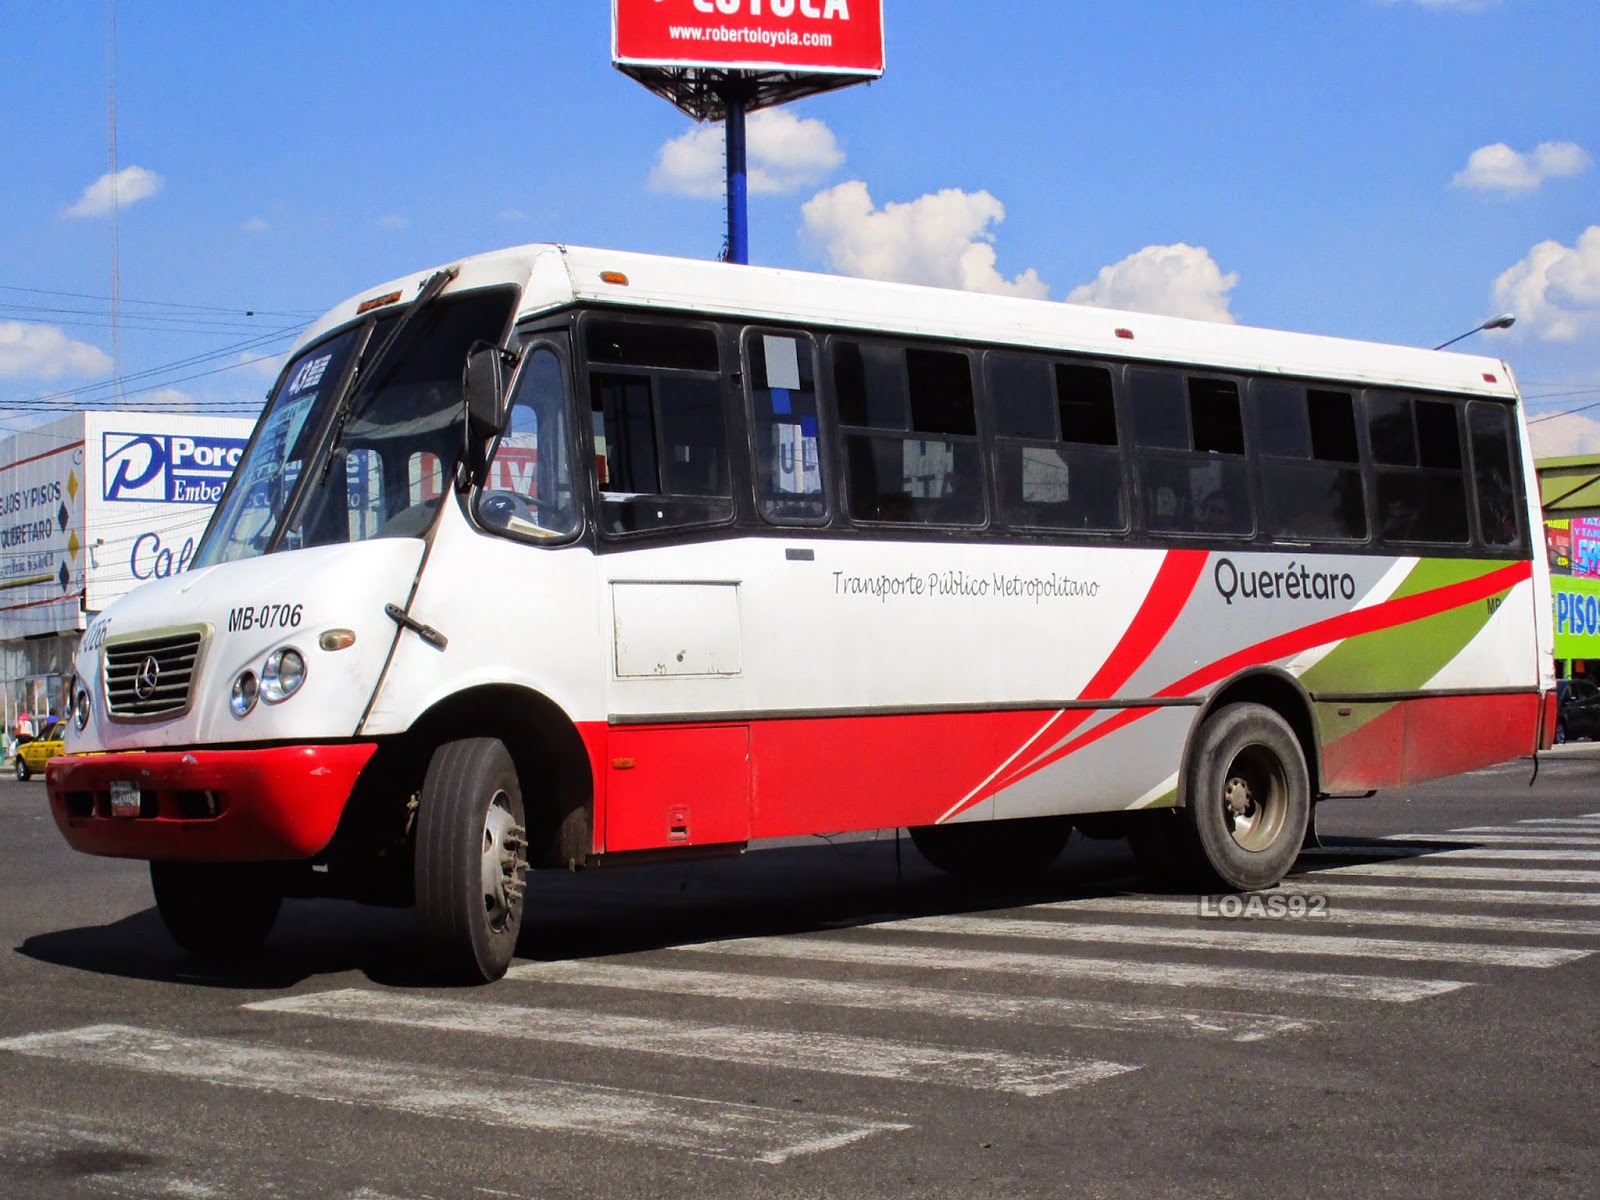  Todos los transportistas de Querétaro podrían colapsar sin aumento de tarifa o subsidio: Mayra Melo